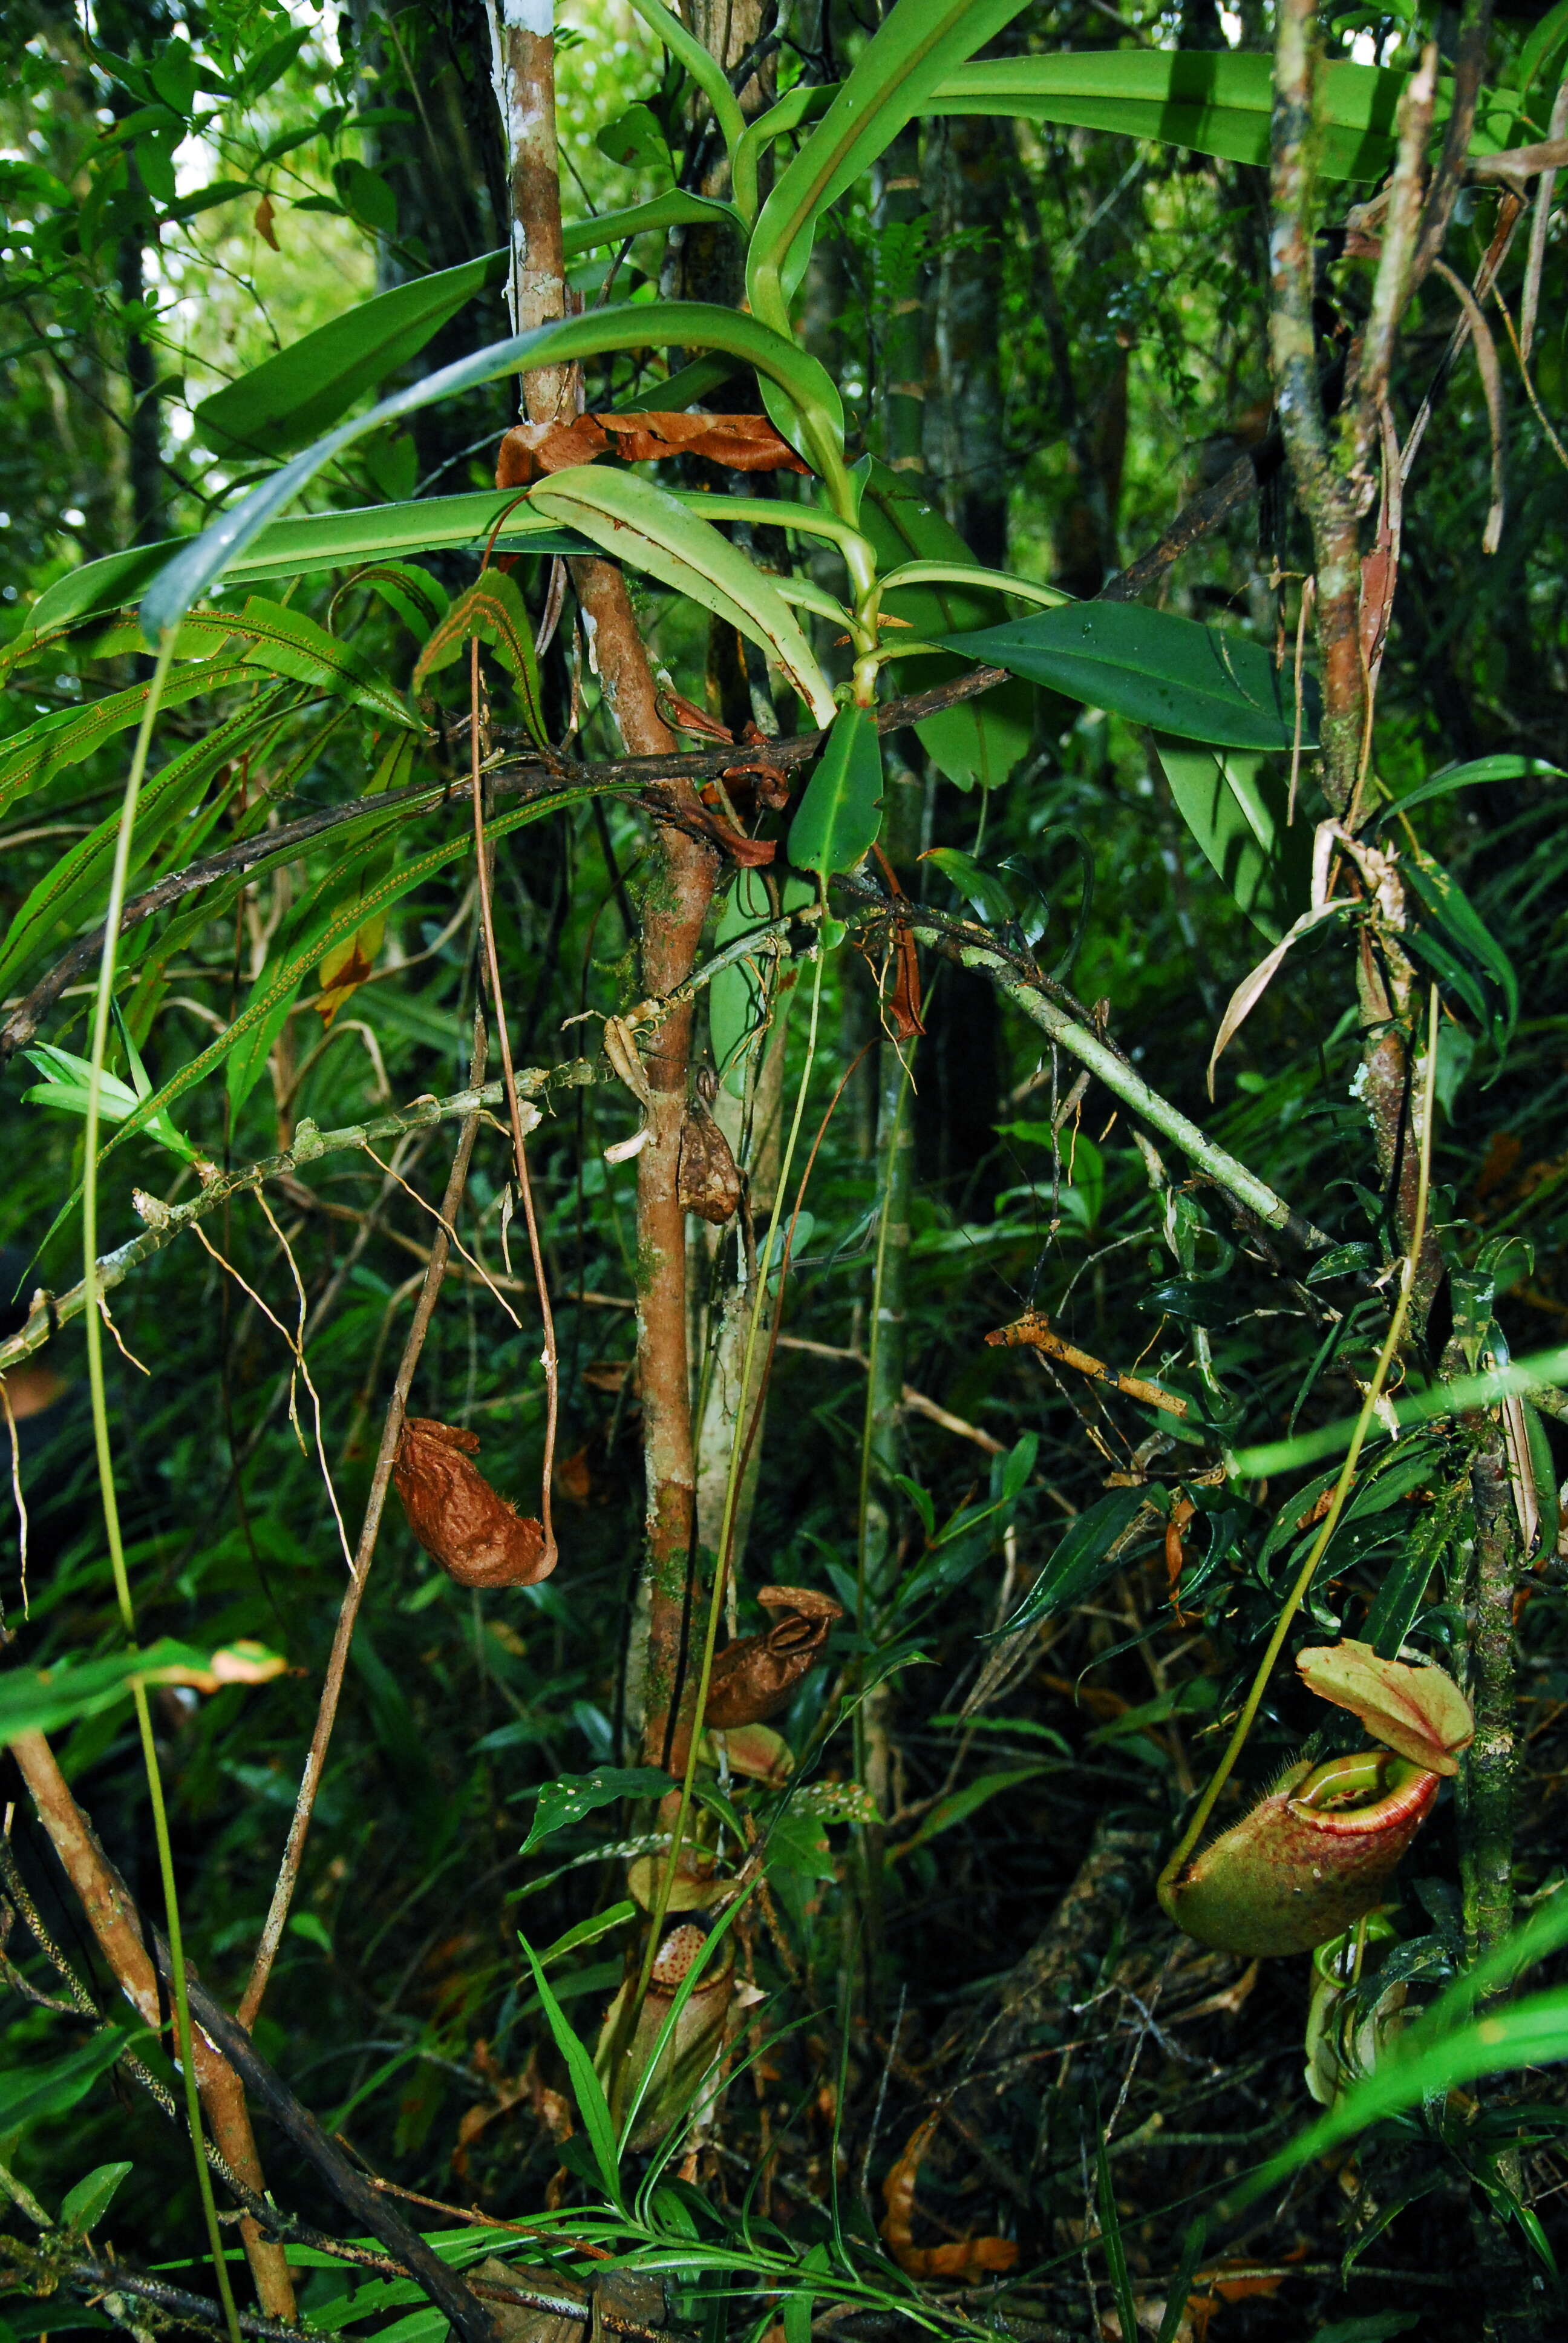 Image of Nepenthes surigaoensis Elmer